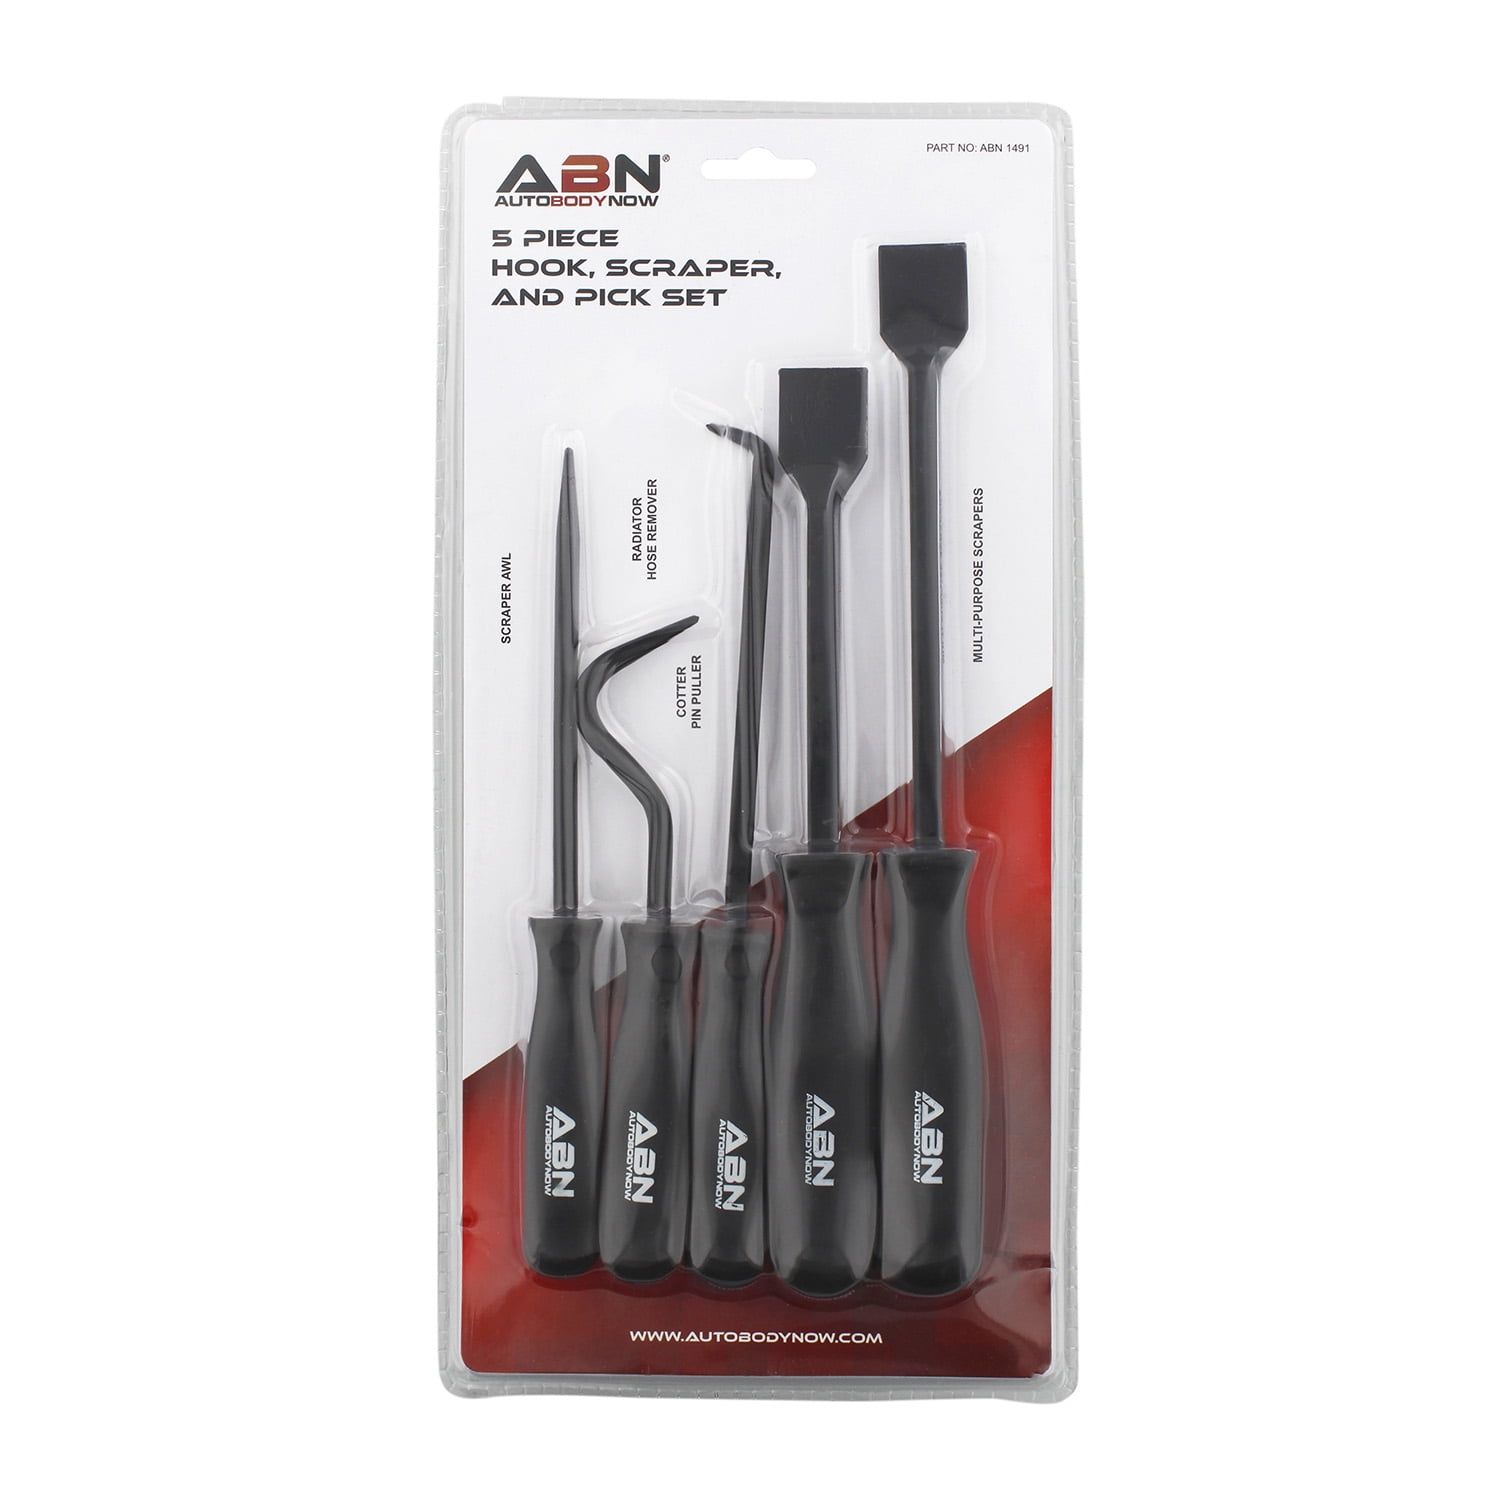 ABN | Hook and Pick Set – 8 Pc Metal Pick Tool Set, 9” Inch Mechanic Pick  Set